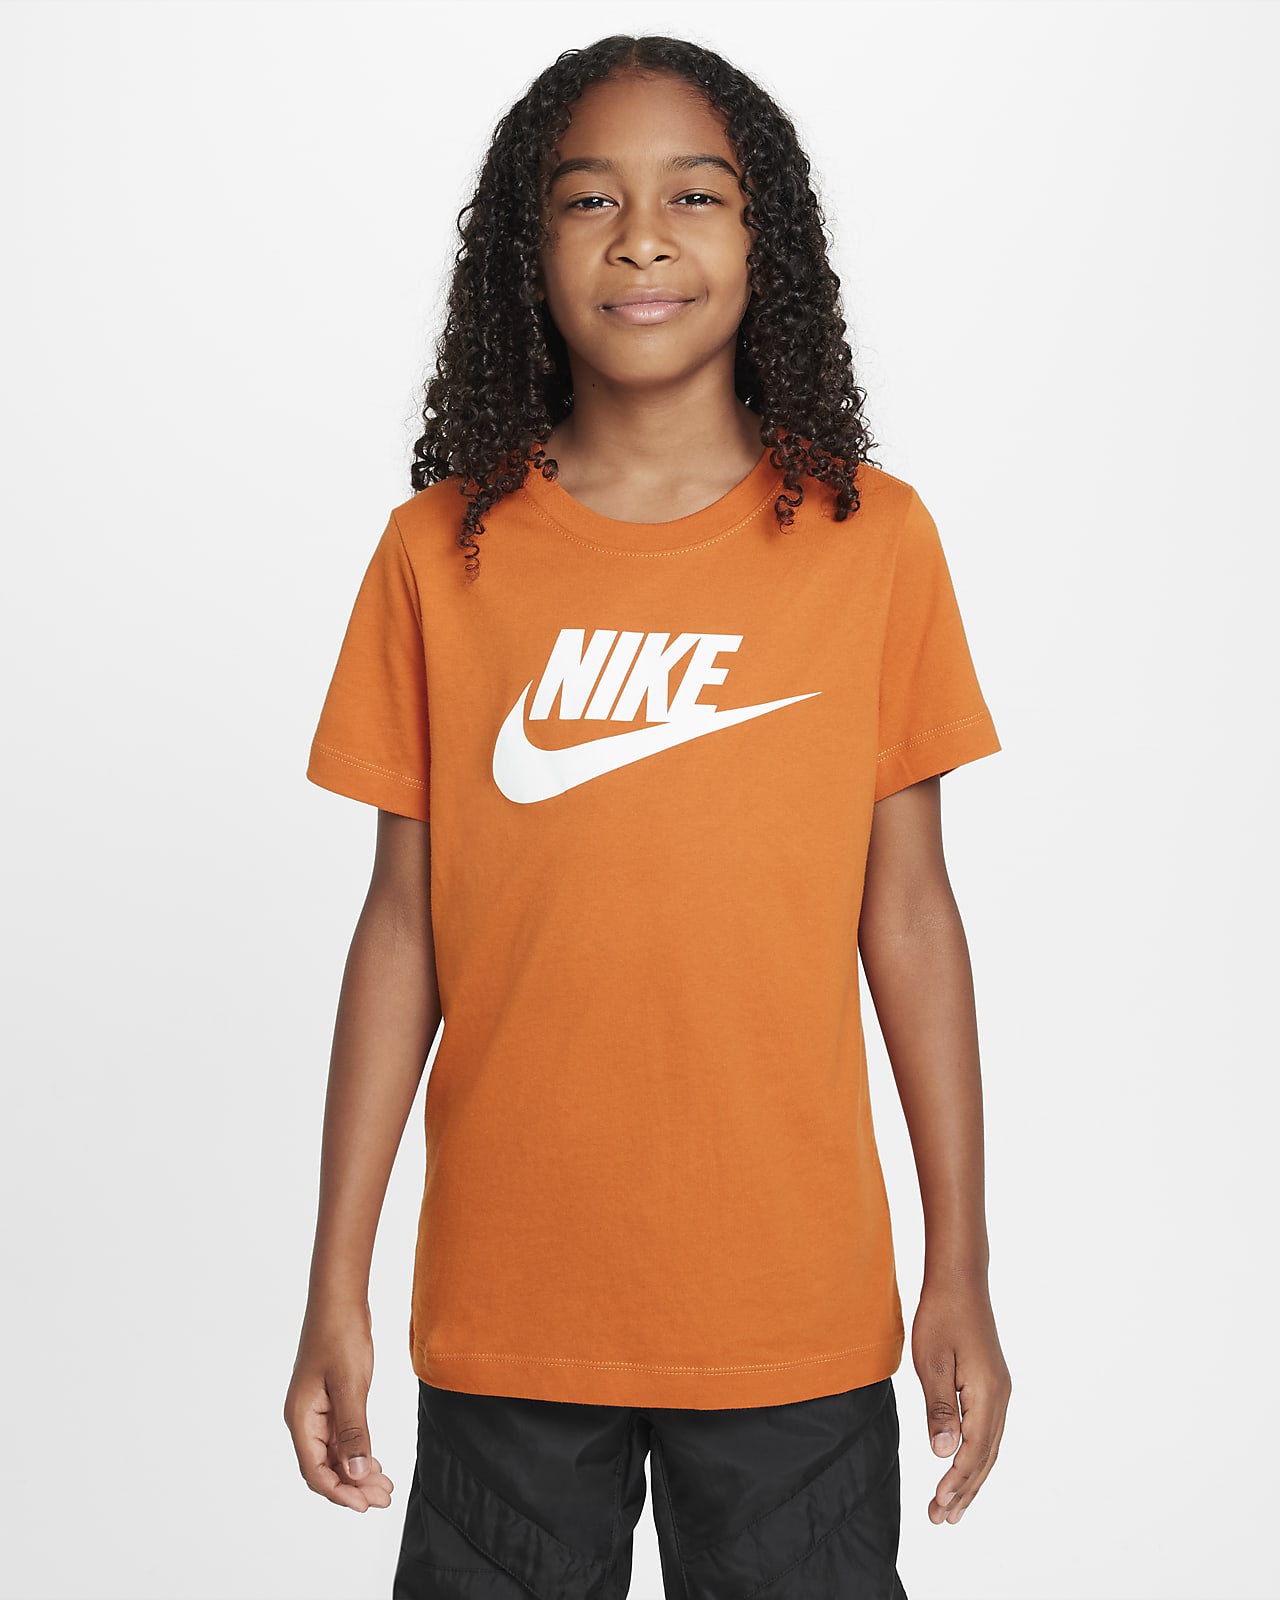 ORANGE Kids Cotton T Shirts